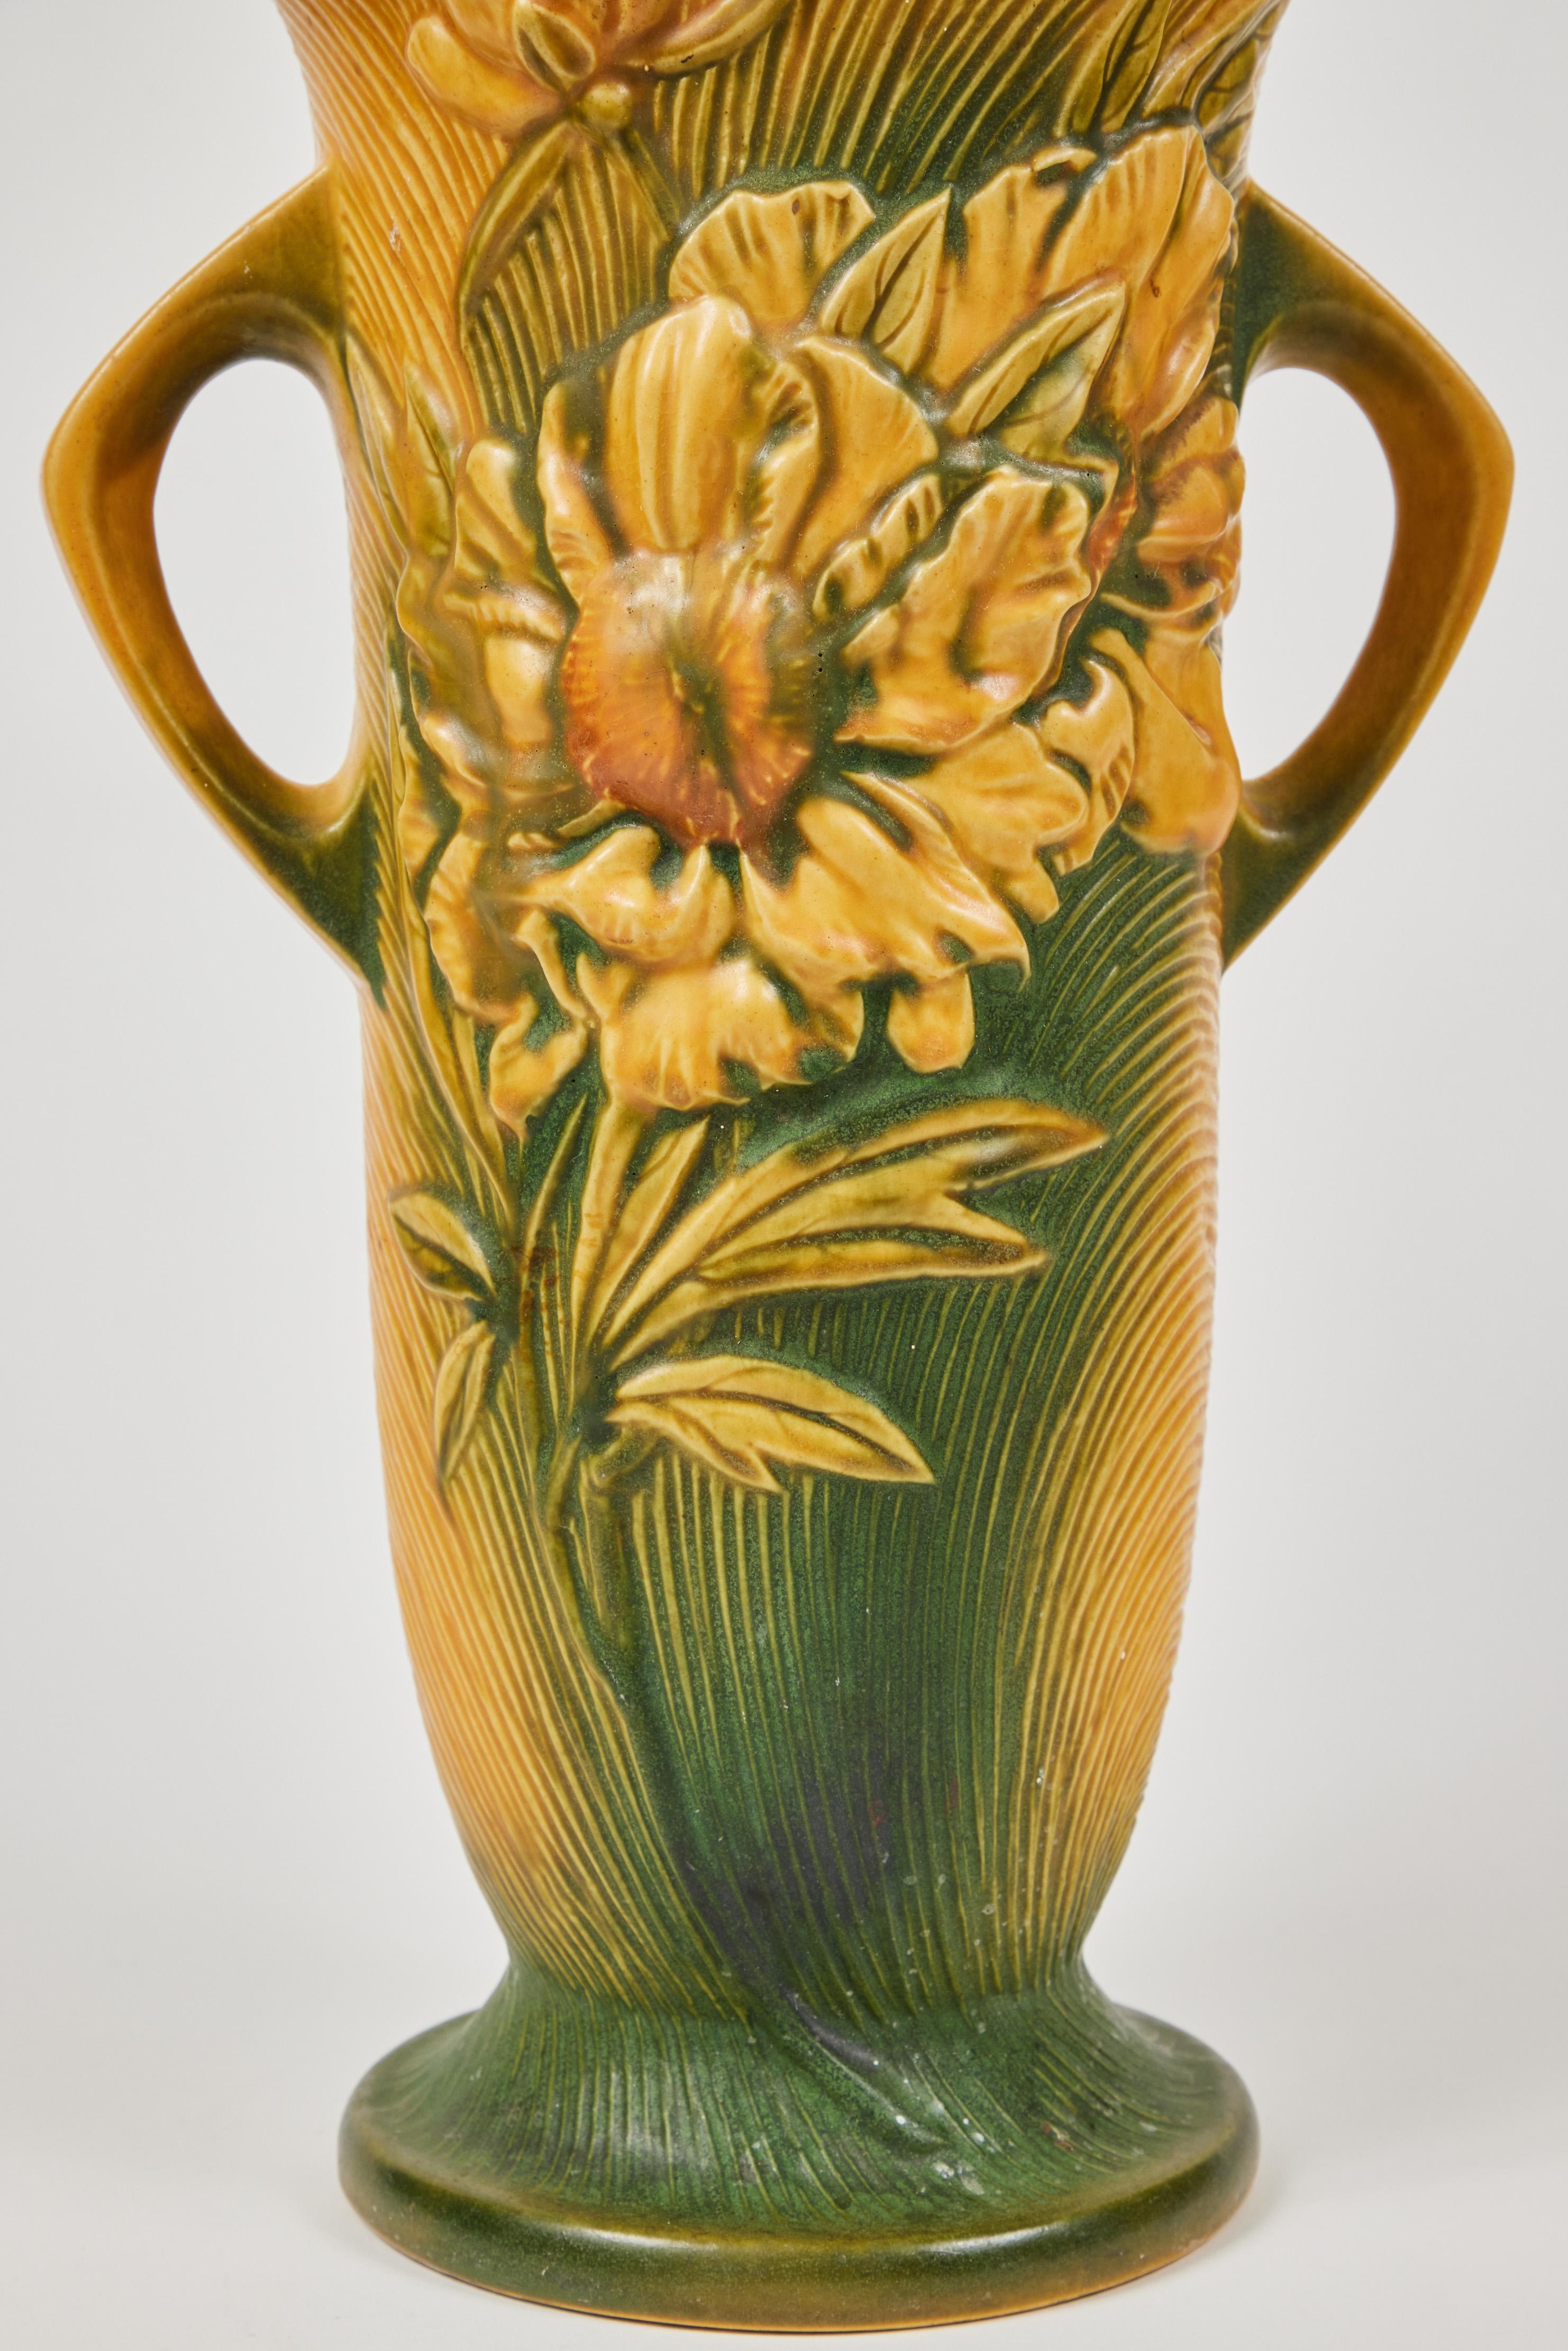 North American Vintage Roseville Pottery Peony Vase, 9-15